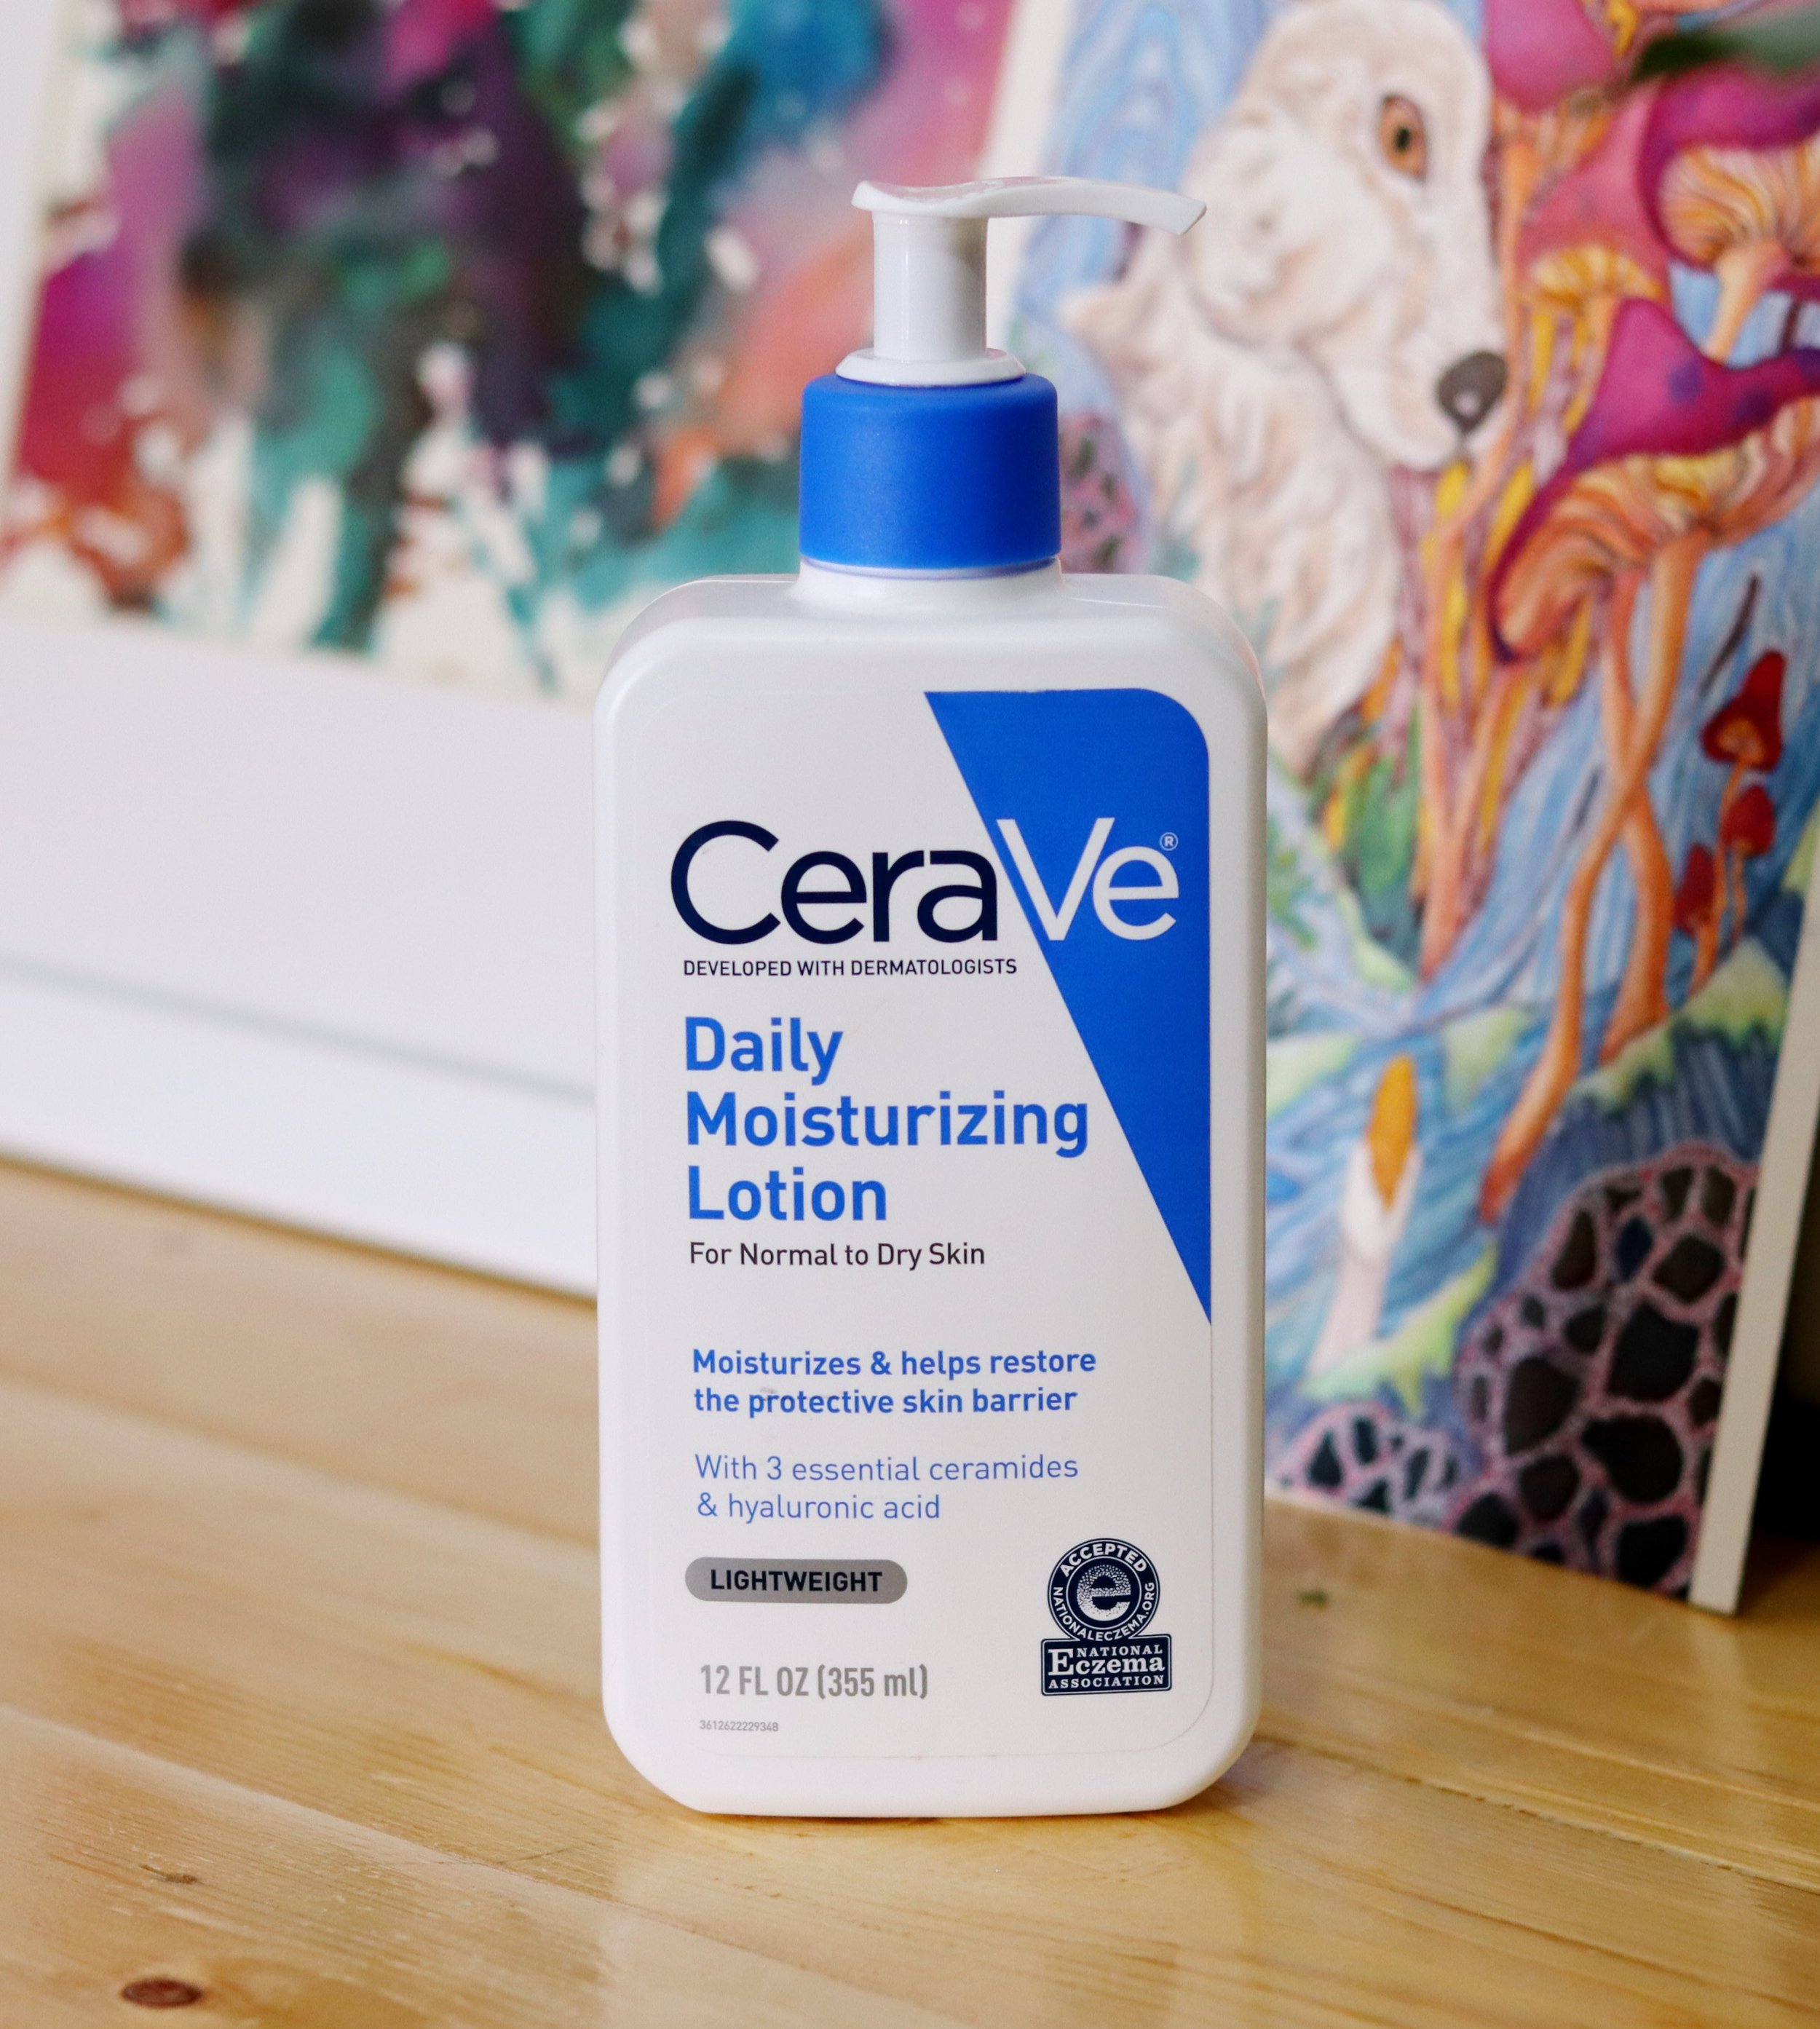 CeraVe Moisturizing Lotion Dry to Very Dry Skin